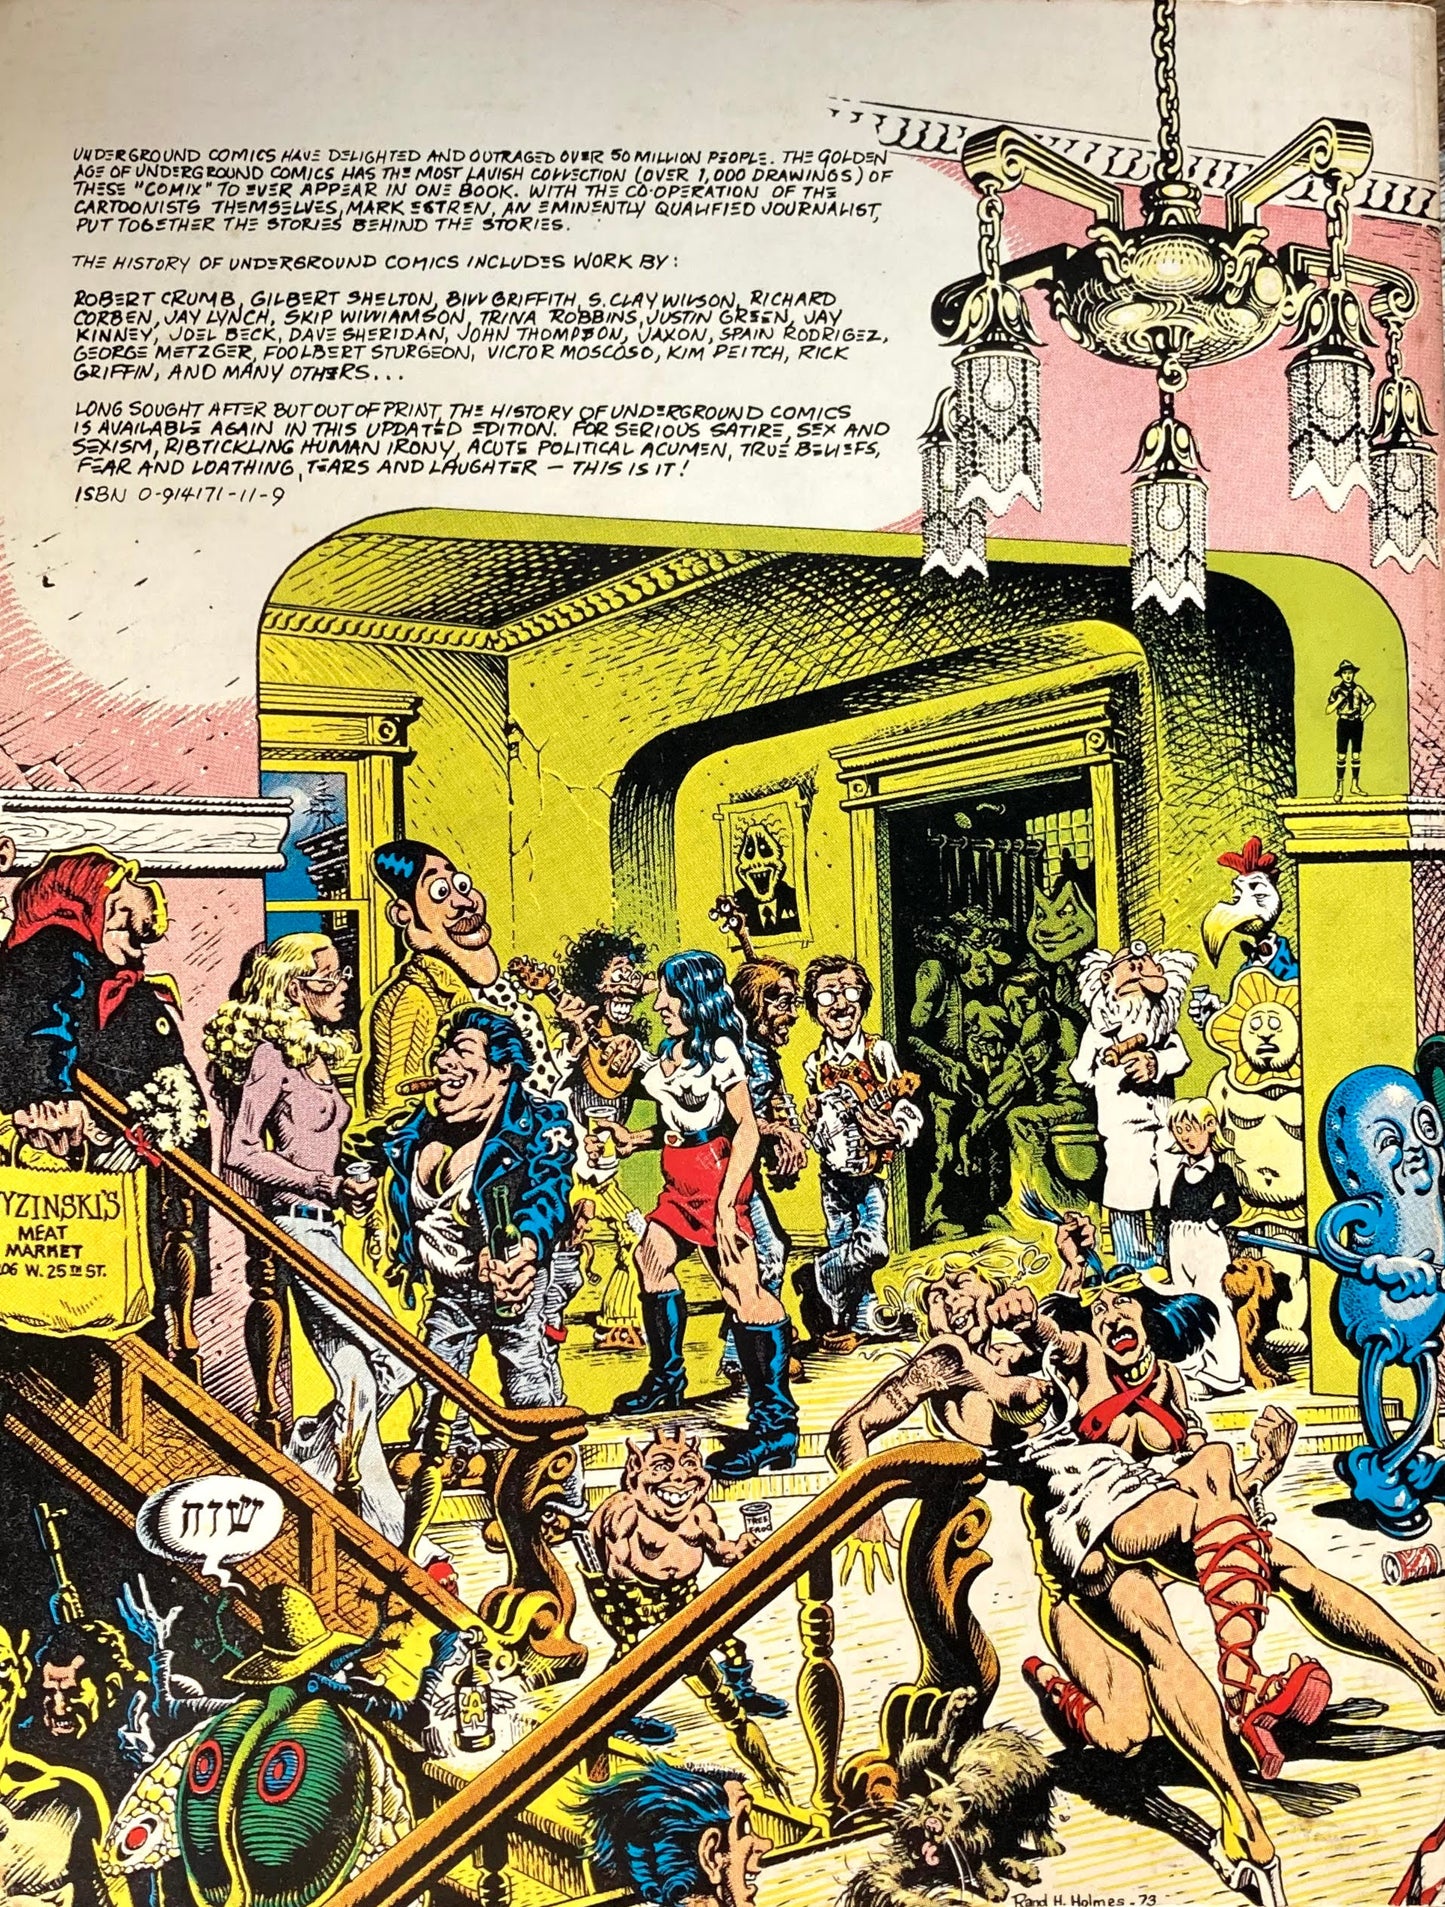 A History of Underground Comics　Mark J Estren